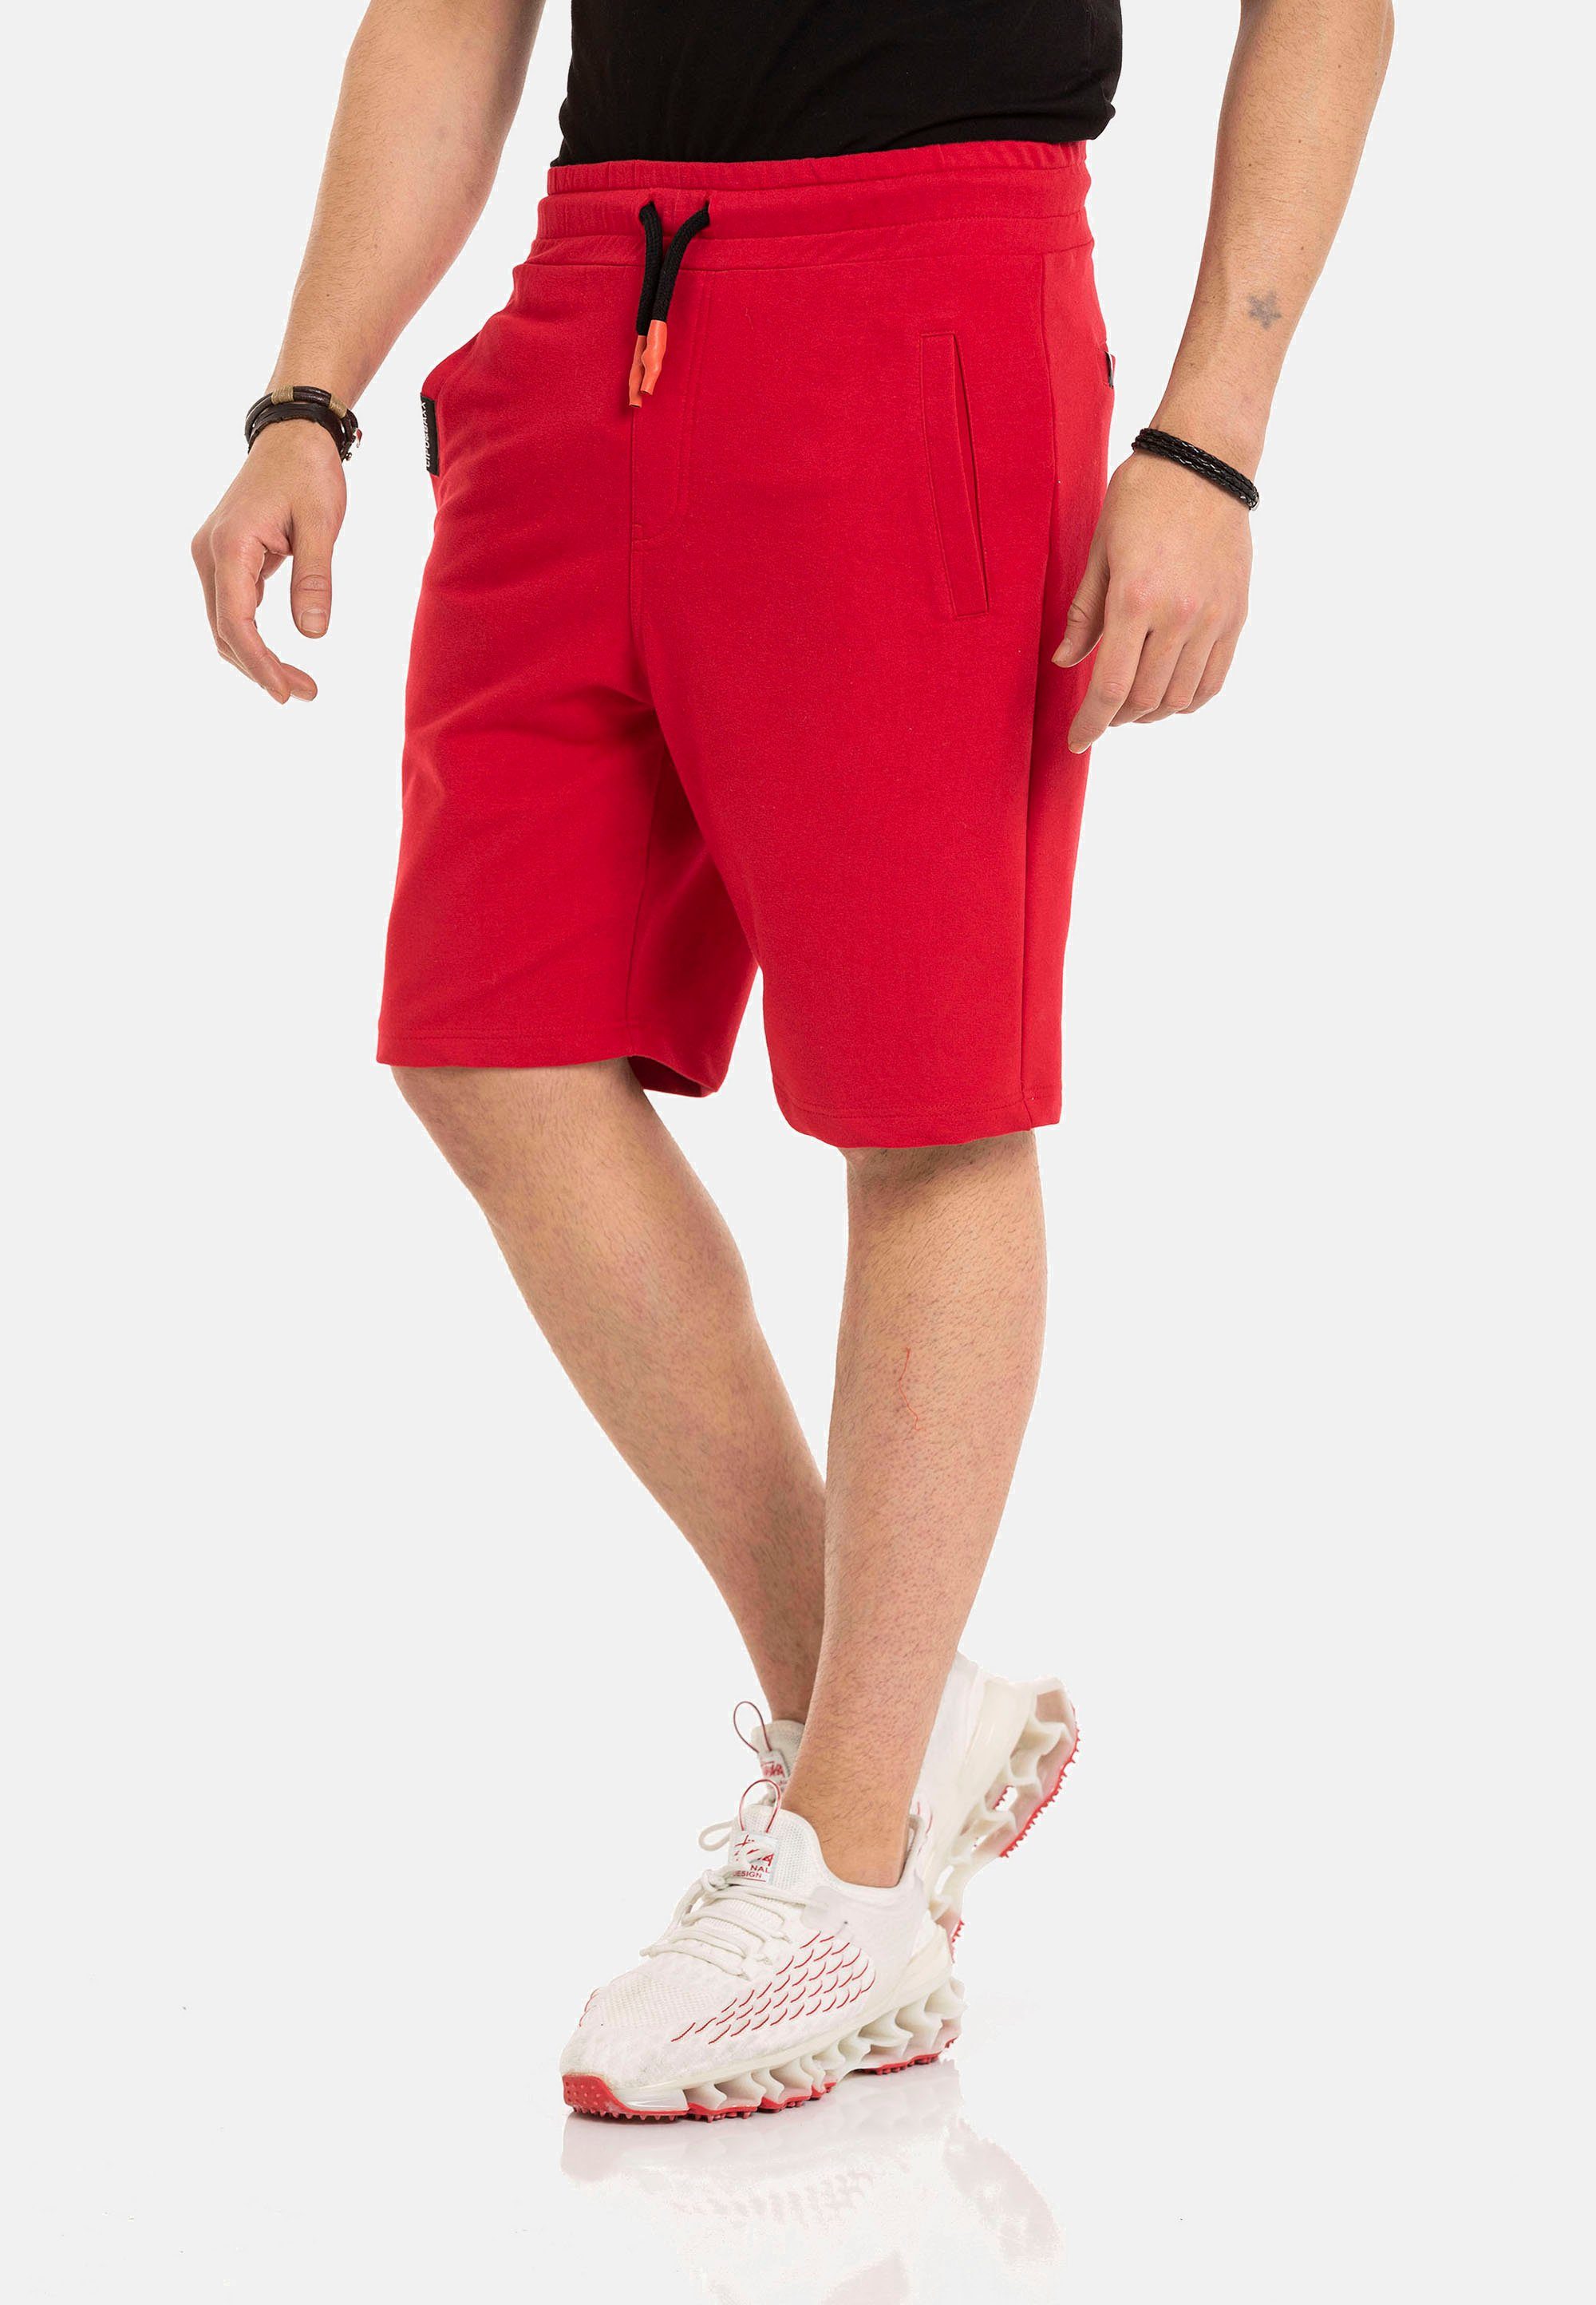 Cipo & Baxx Shorts in rot Look sportlichem